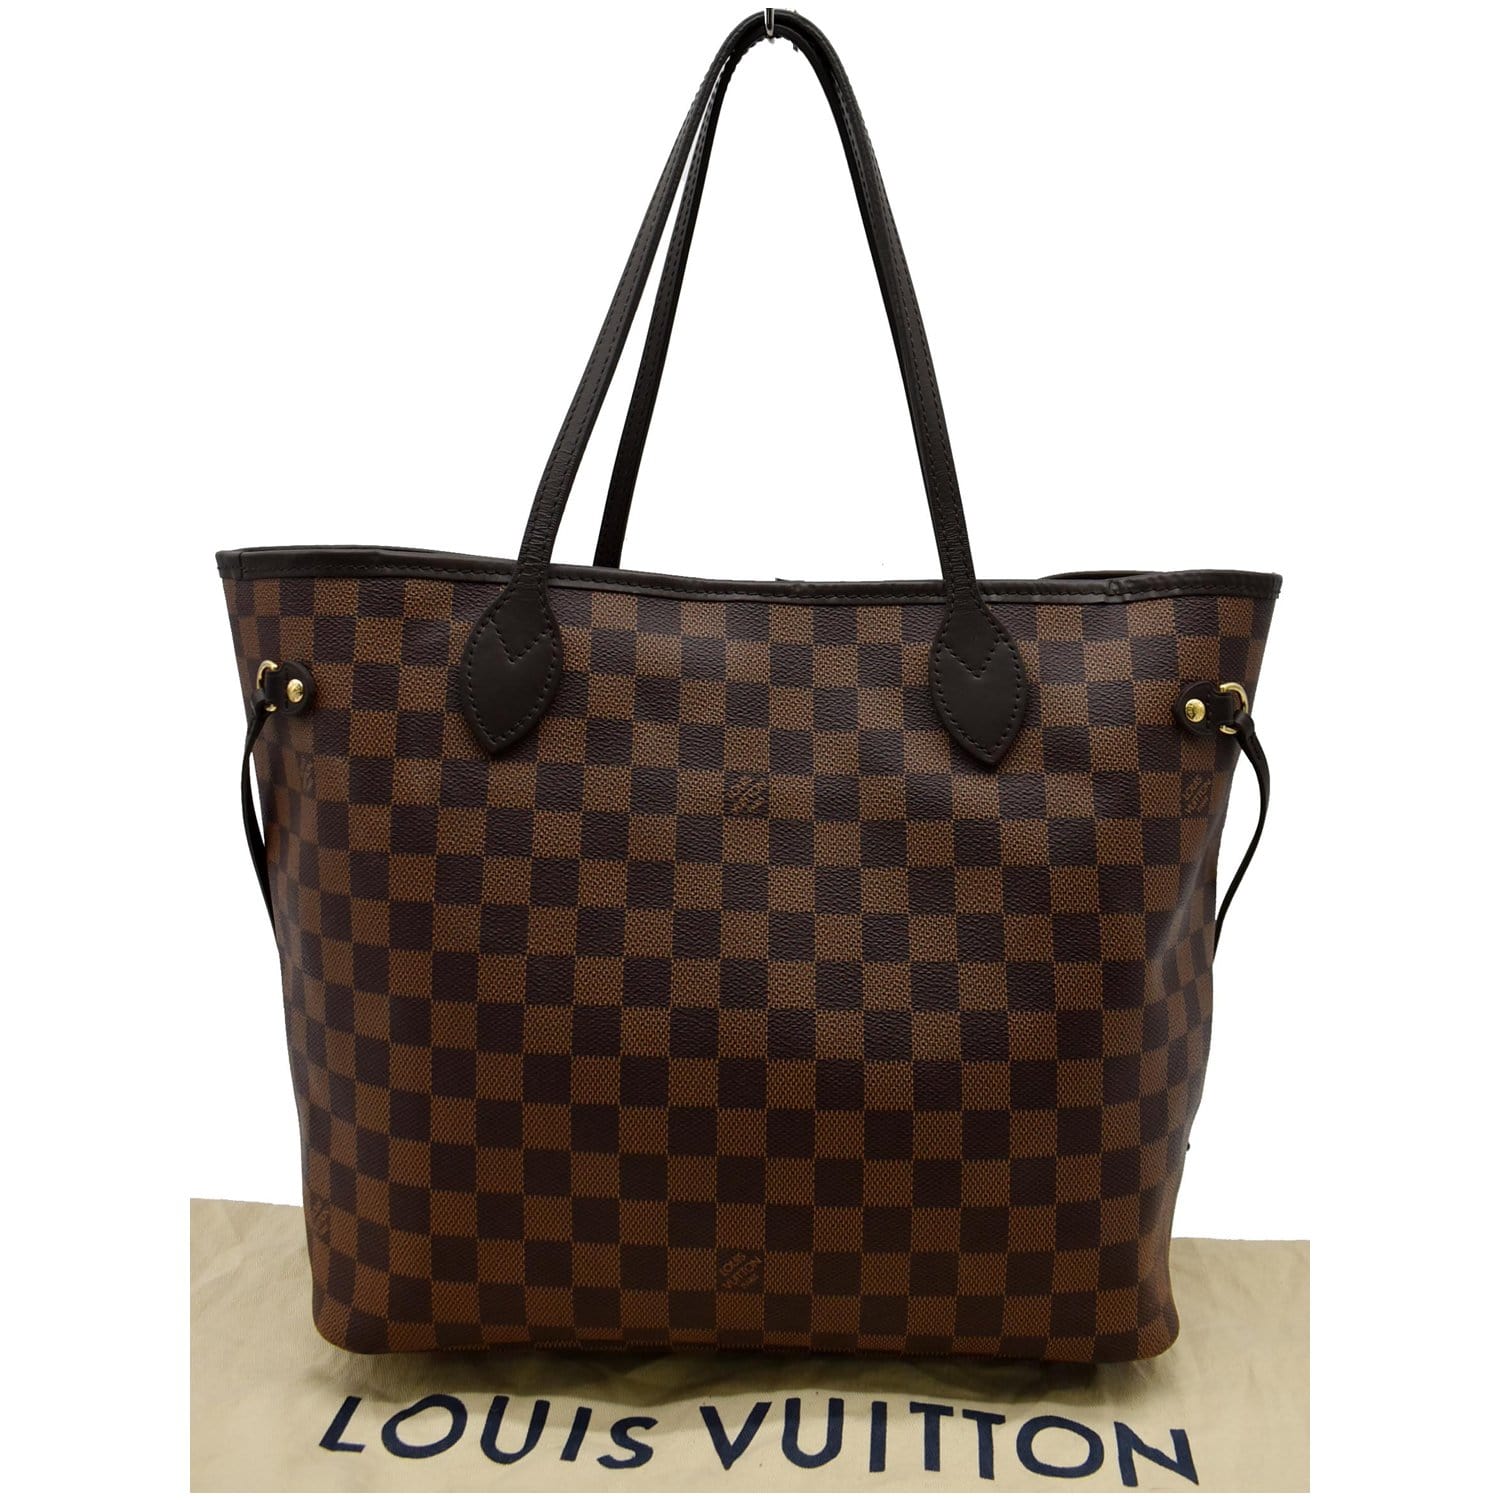 Louis Vuitton Neverfull mm Tote Bag(Ebene)